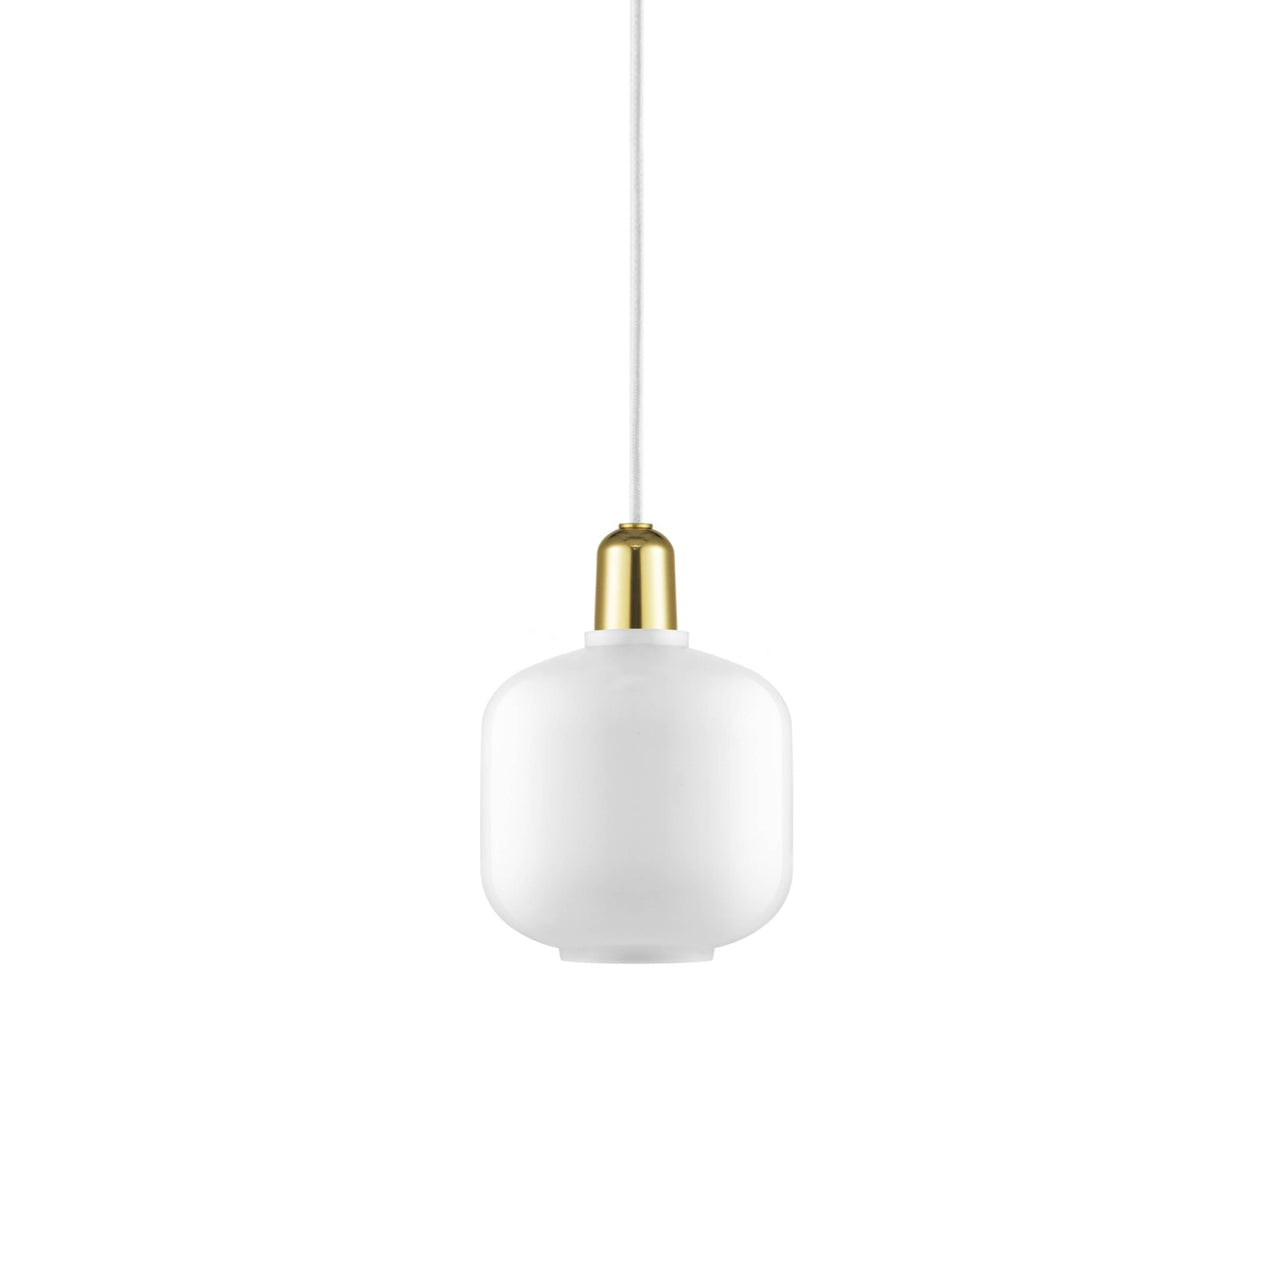 Amp Pendant Lamp: Small + White + Brass